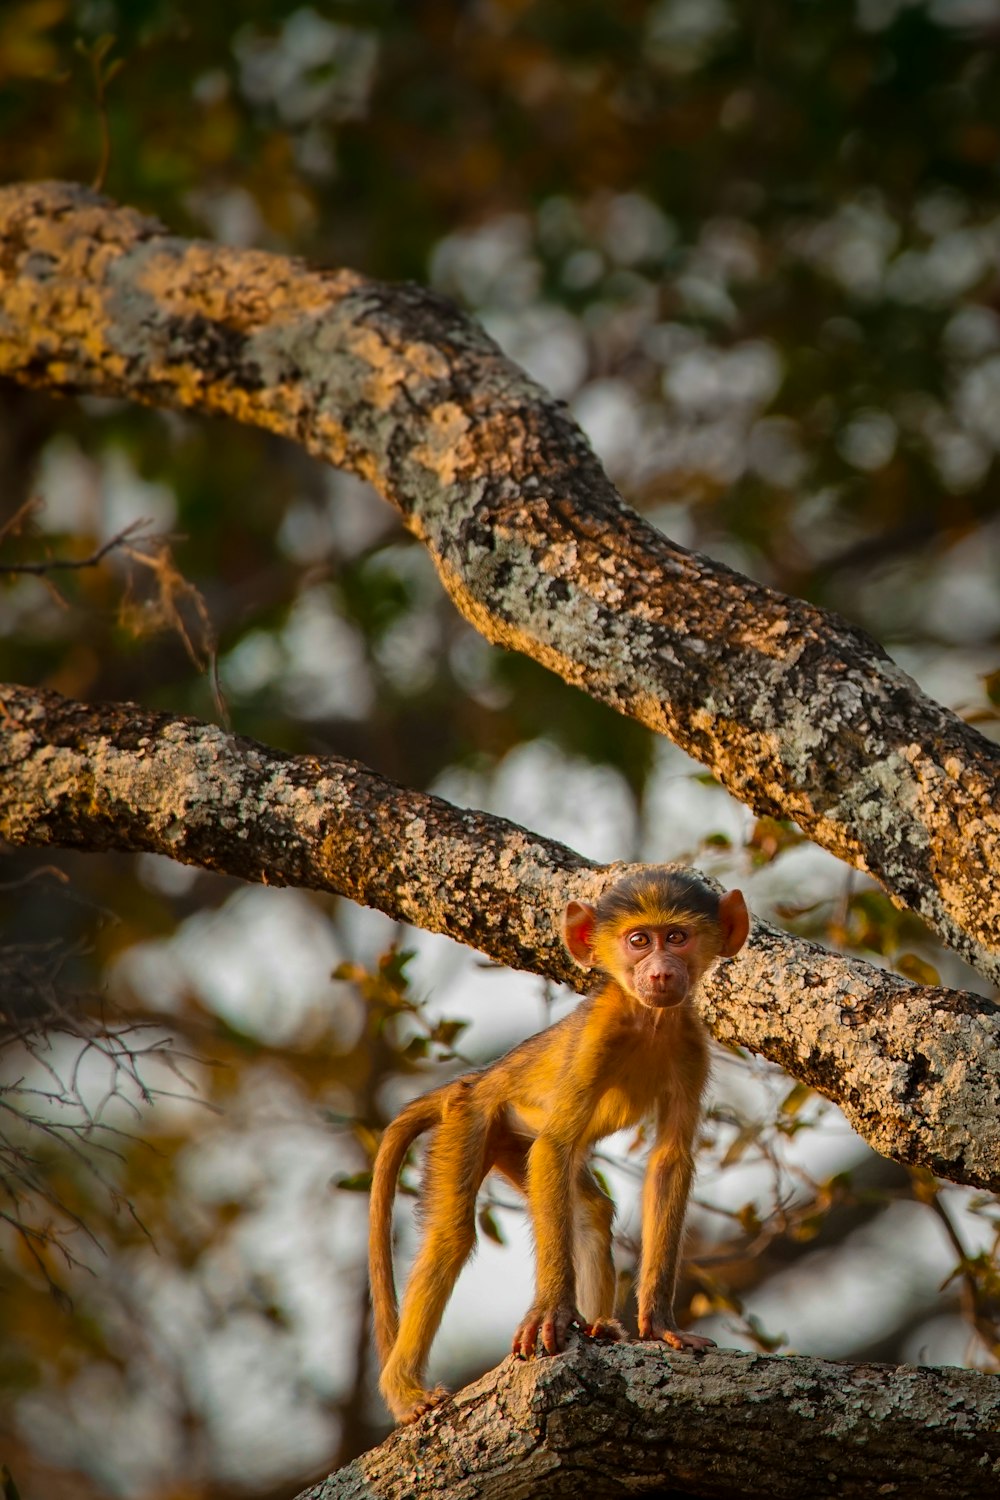 a monkey sitting on a tree branch